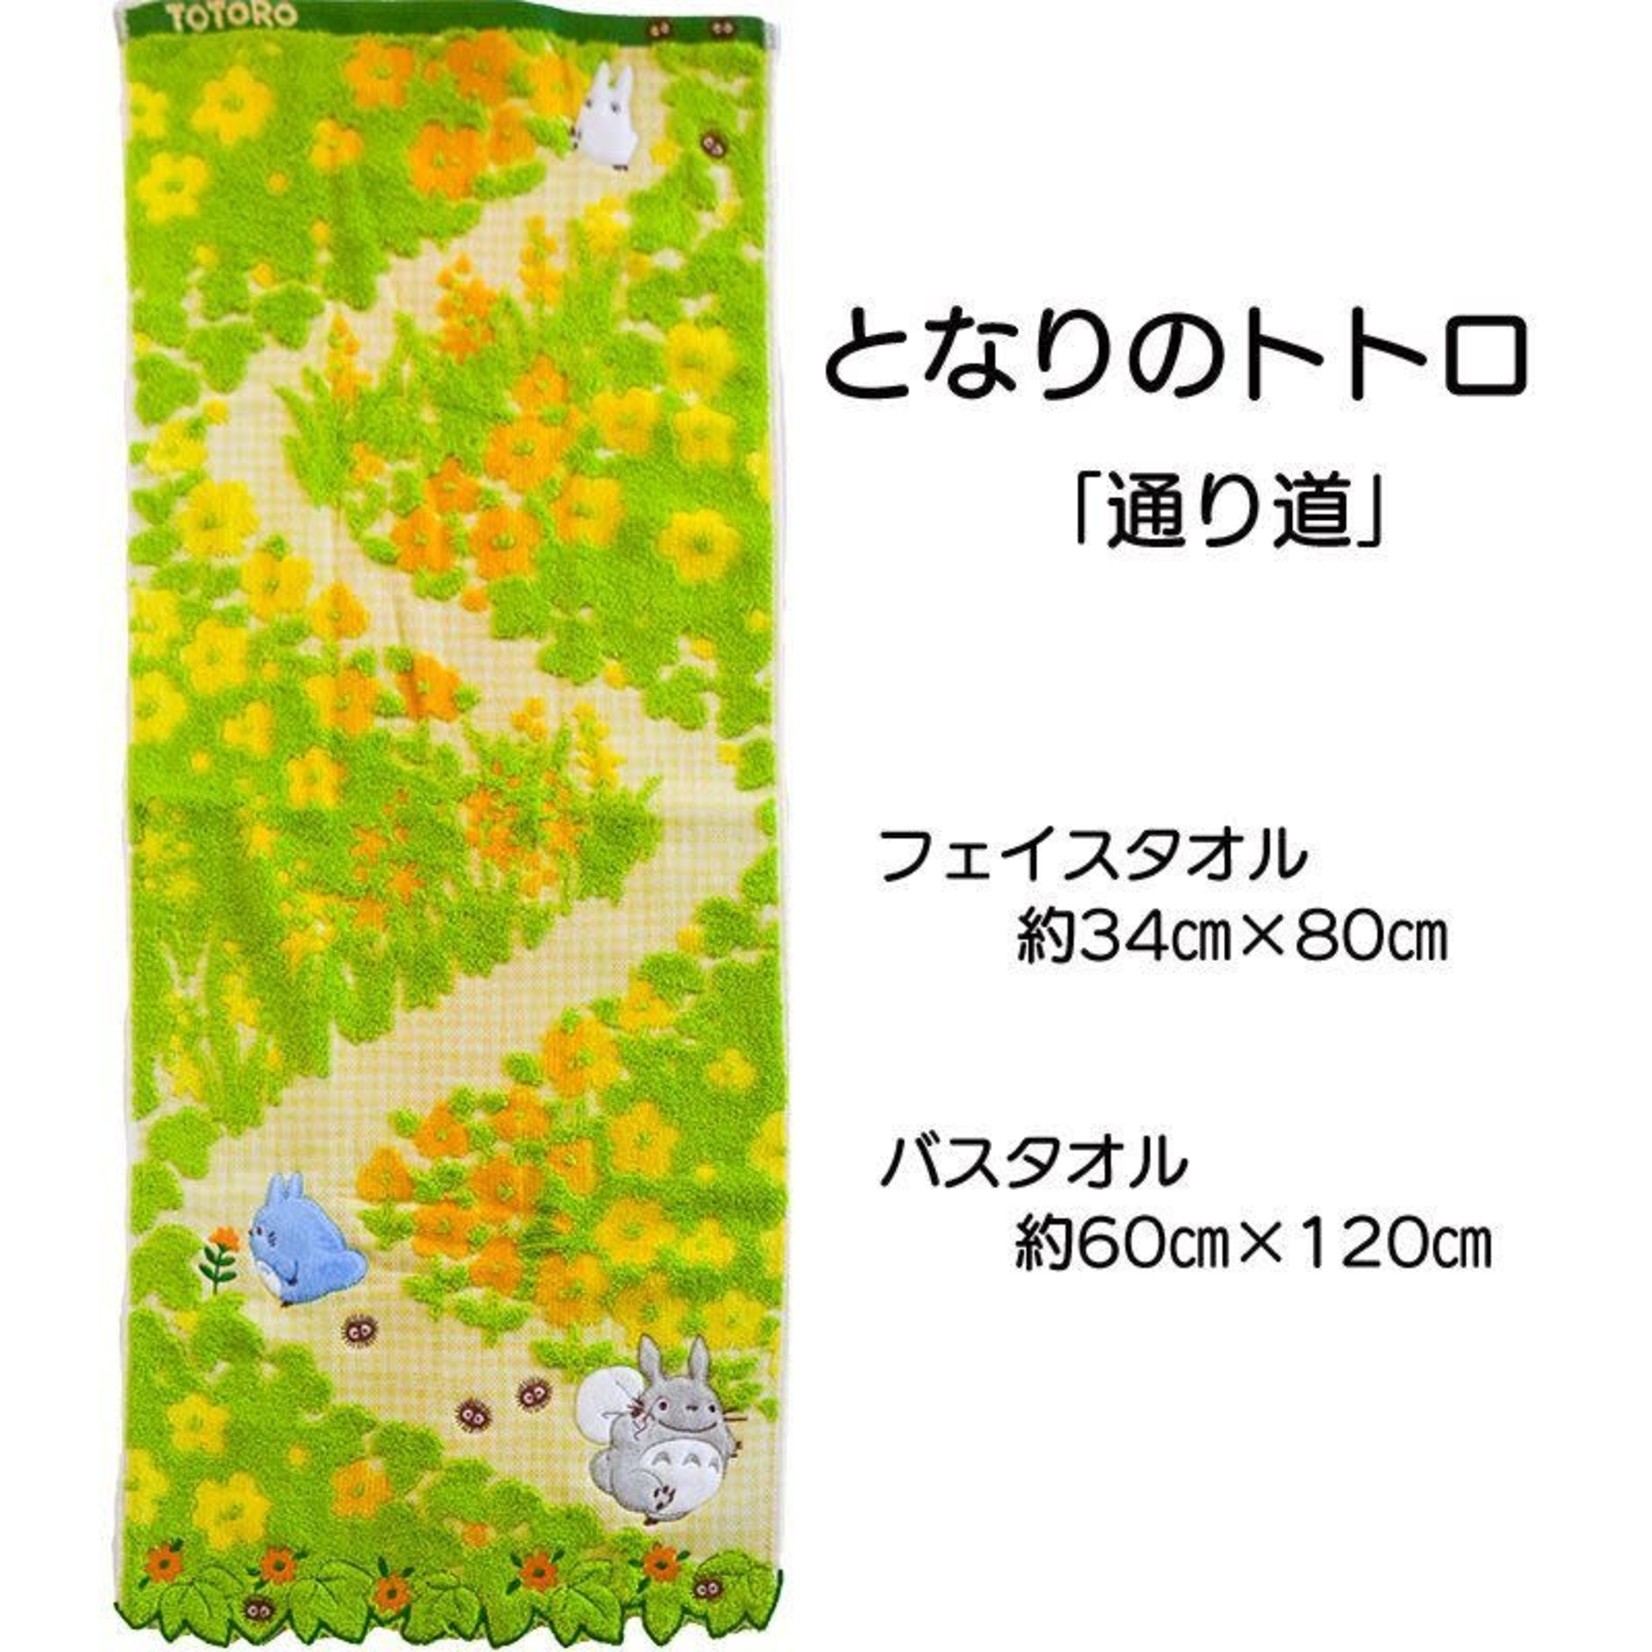 Marushin Totoro (Passage) Towel